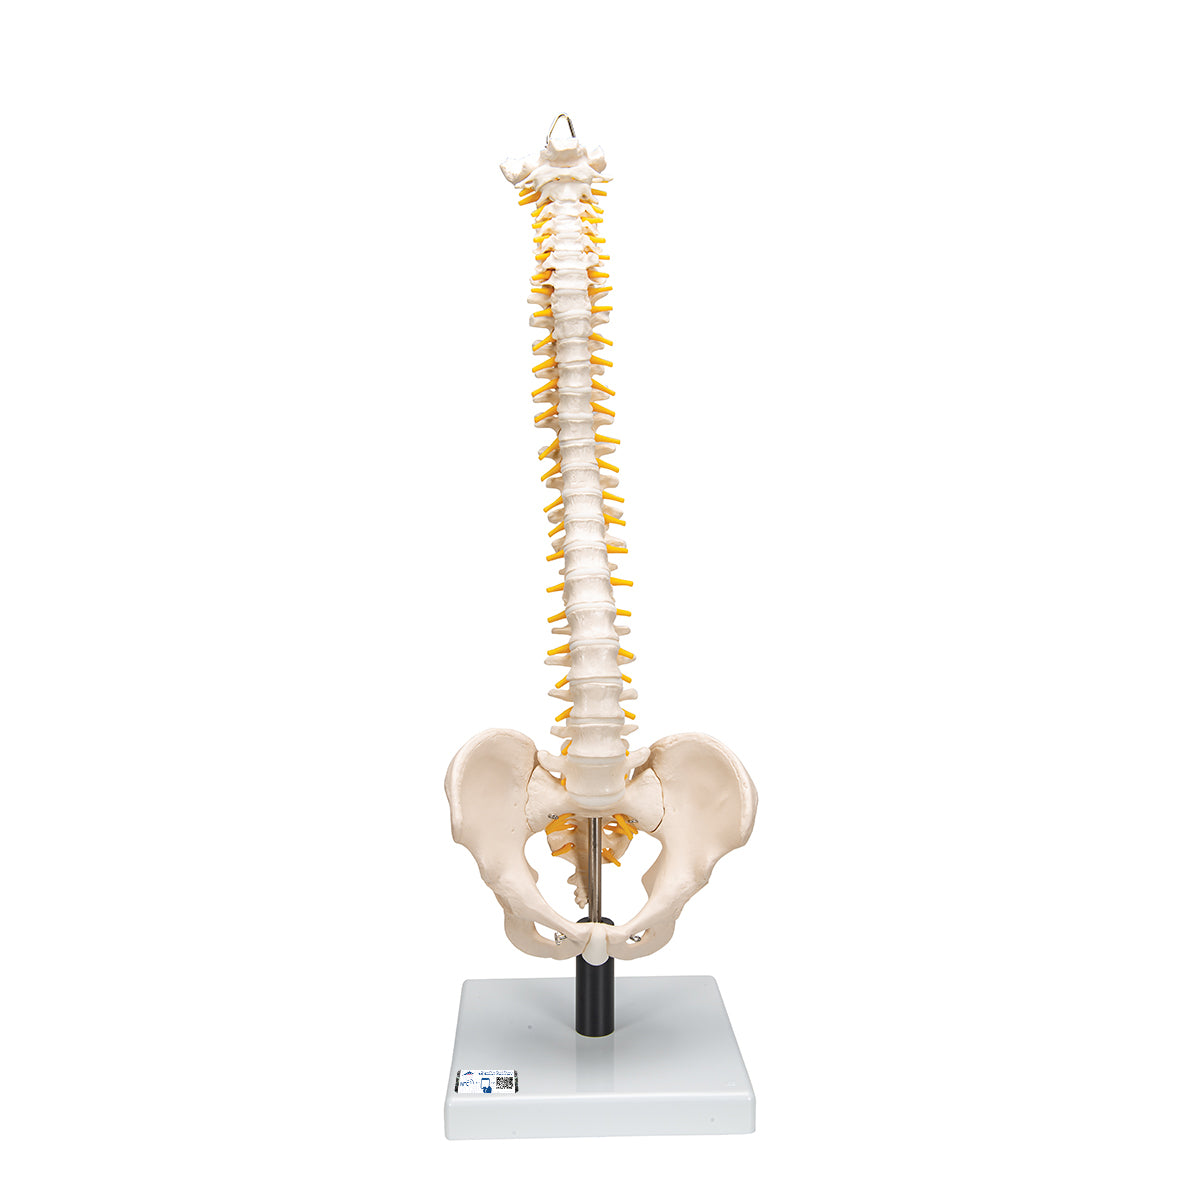 Flexible Human Spine Model with Soft Intervertebral Discs